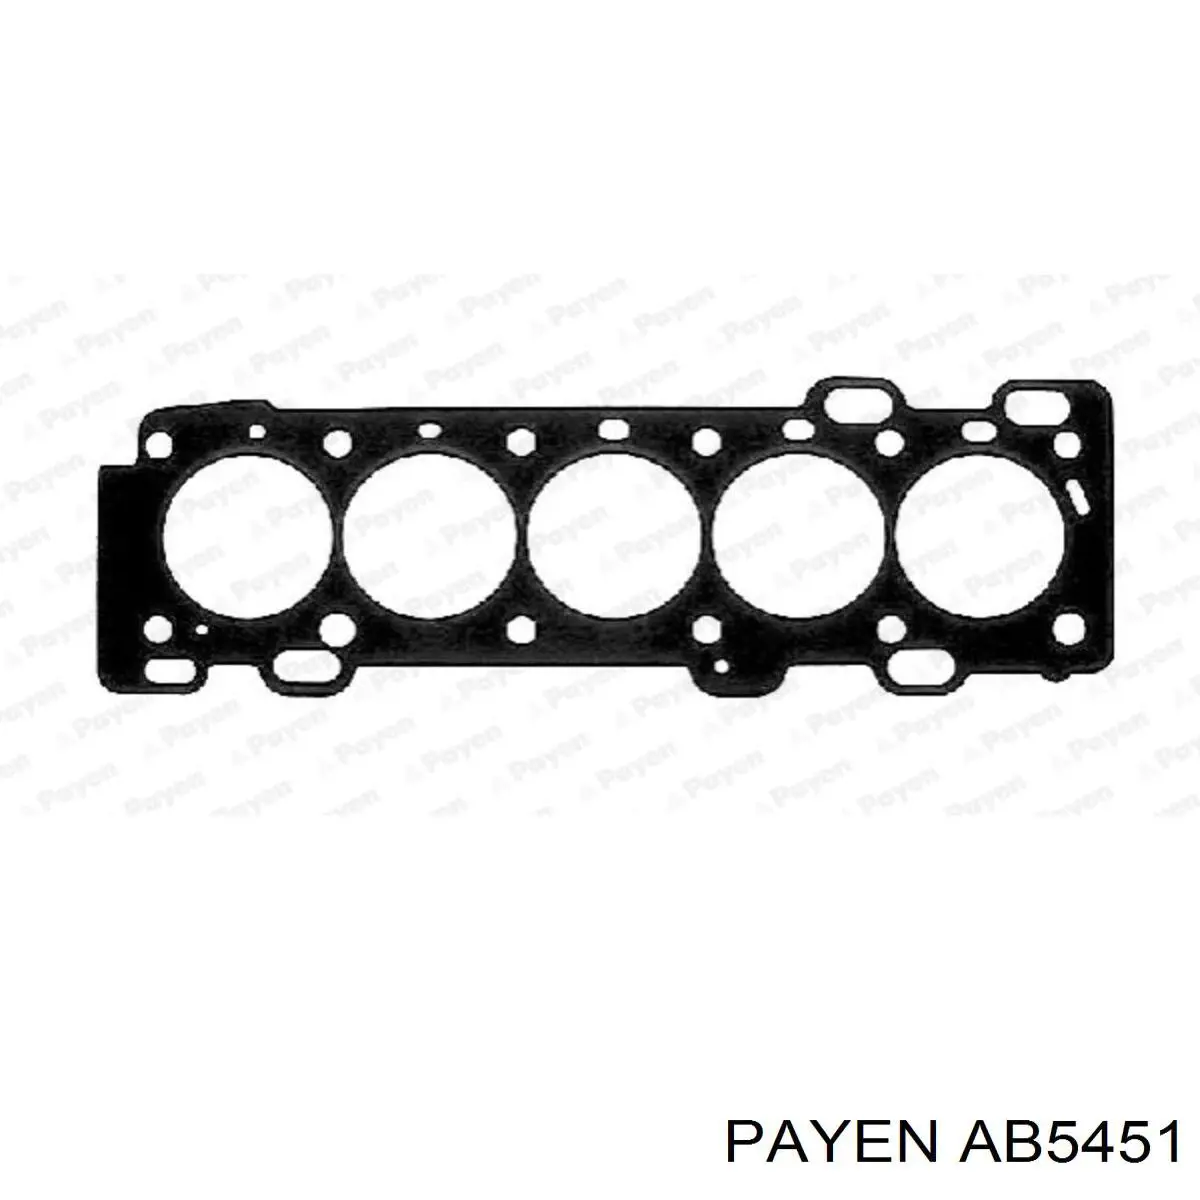 AB5451 Payen vedante de cabeça de motor (cbc)